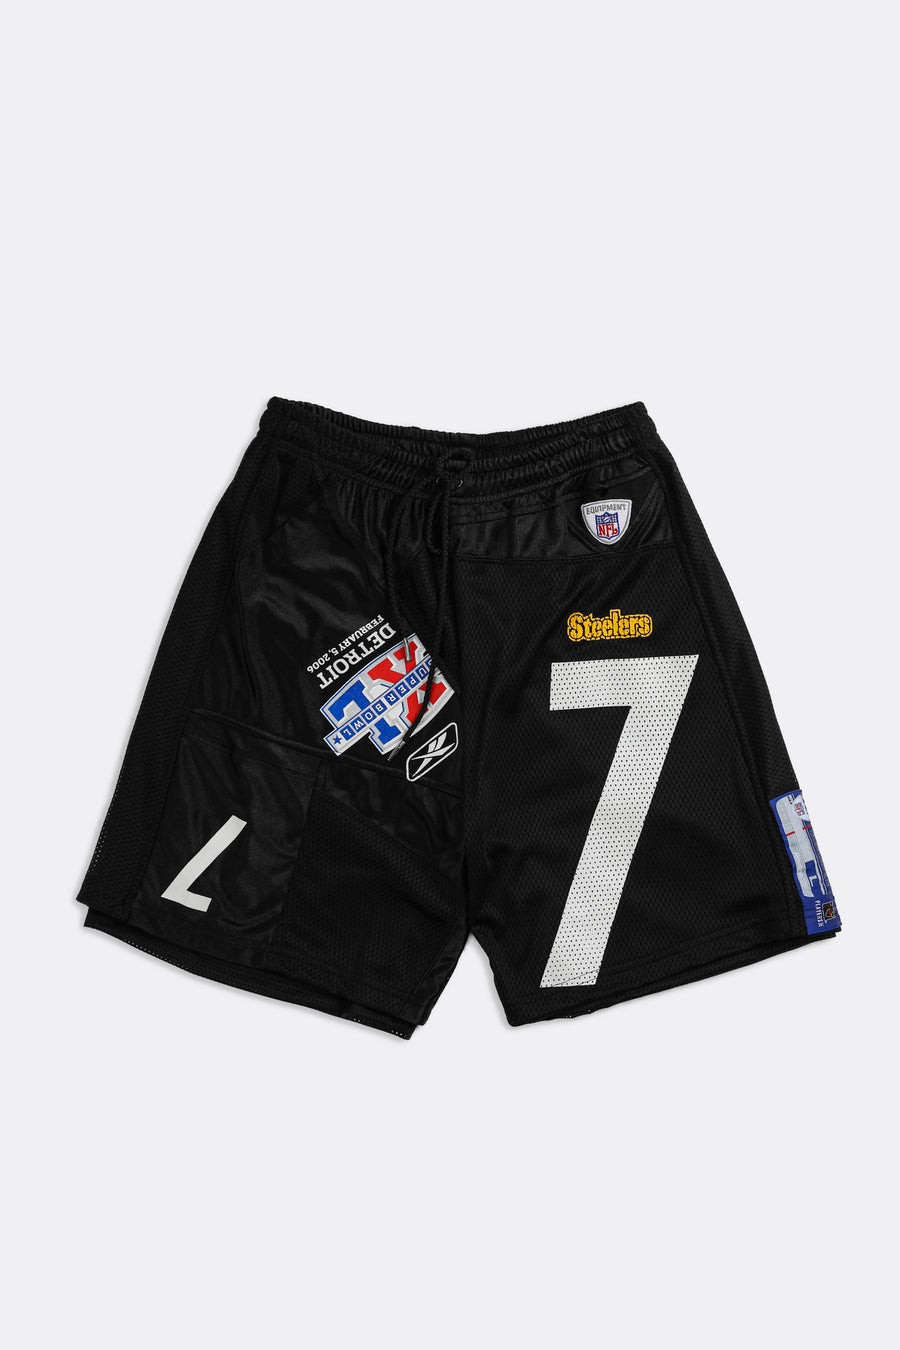 Unisex Rework Steelers NFL Jersey Shorts - Women-M, Men-S